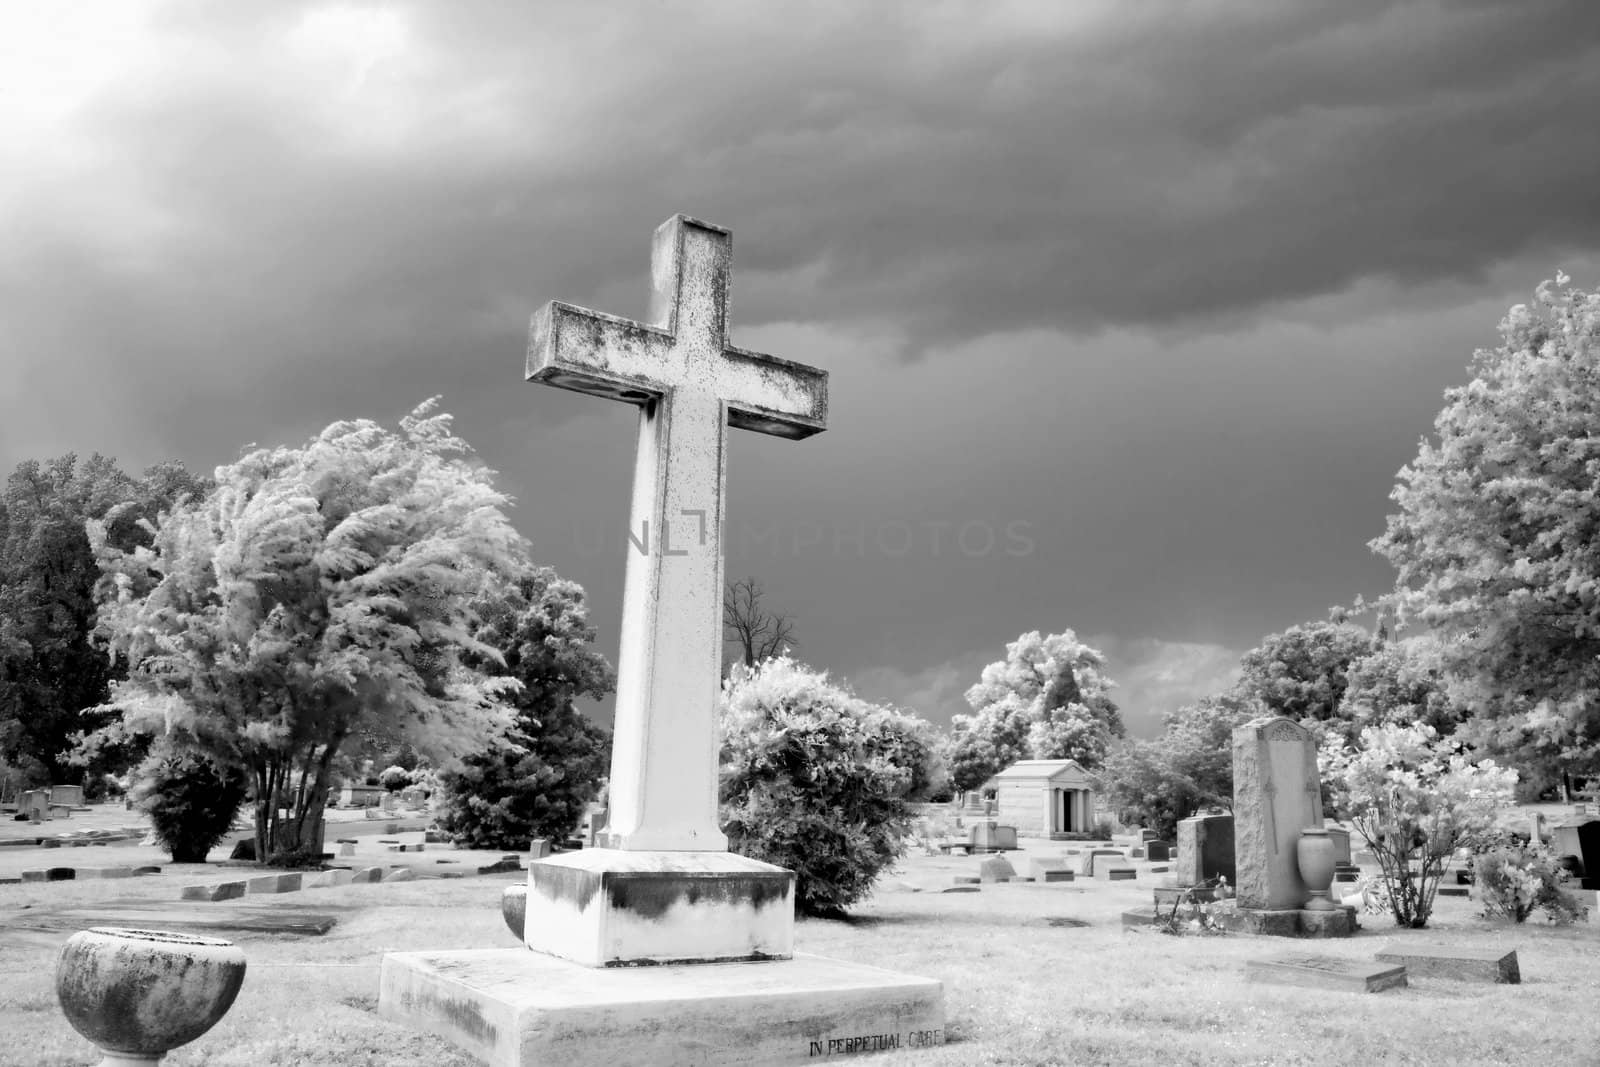 Infrared graveyard scene with cross and gravestones.